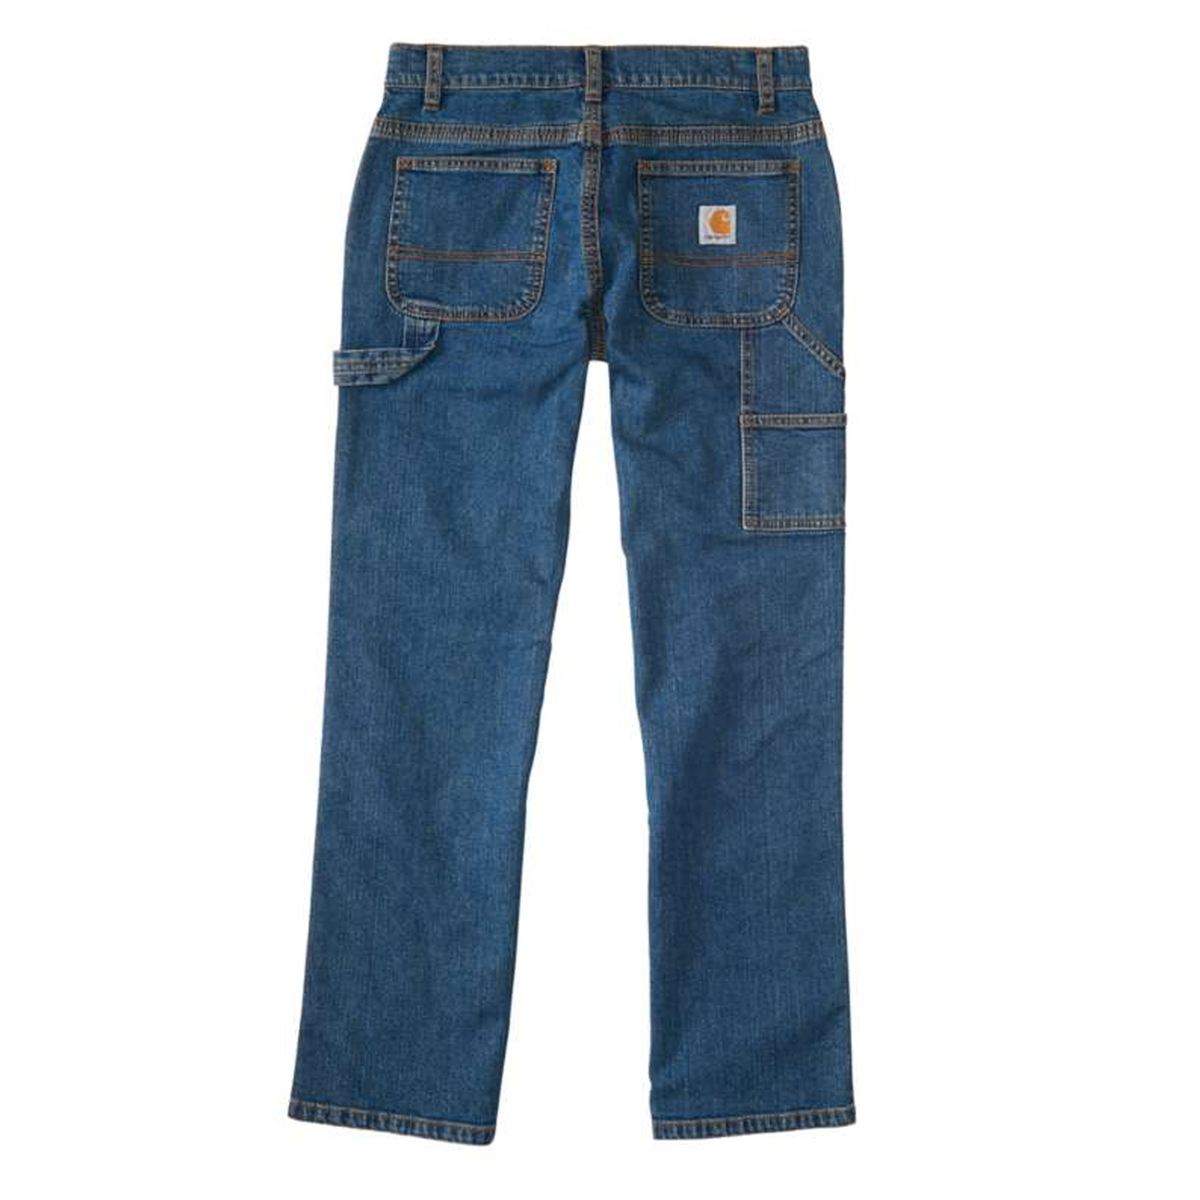 Carhartt Boy's Dungaree Denim Jeans - Medium Wash - 10 - Medium Wash 10 ...